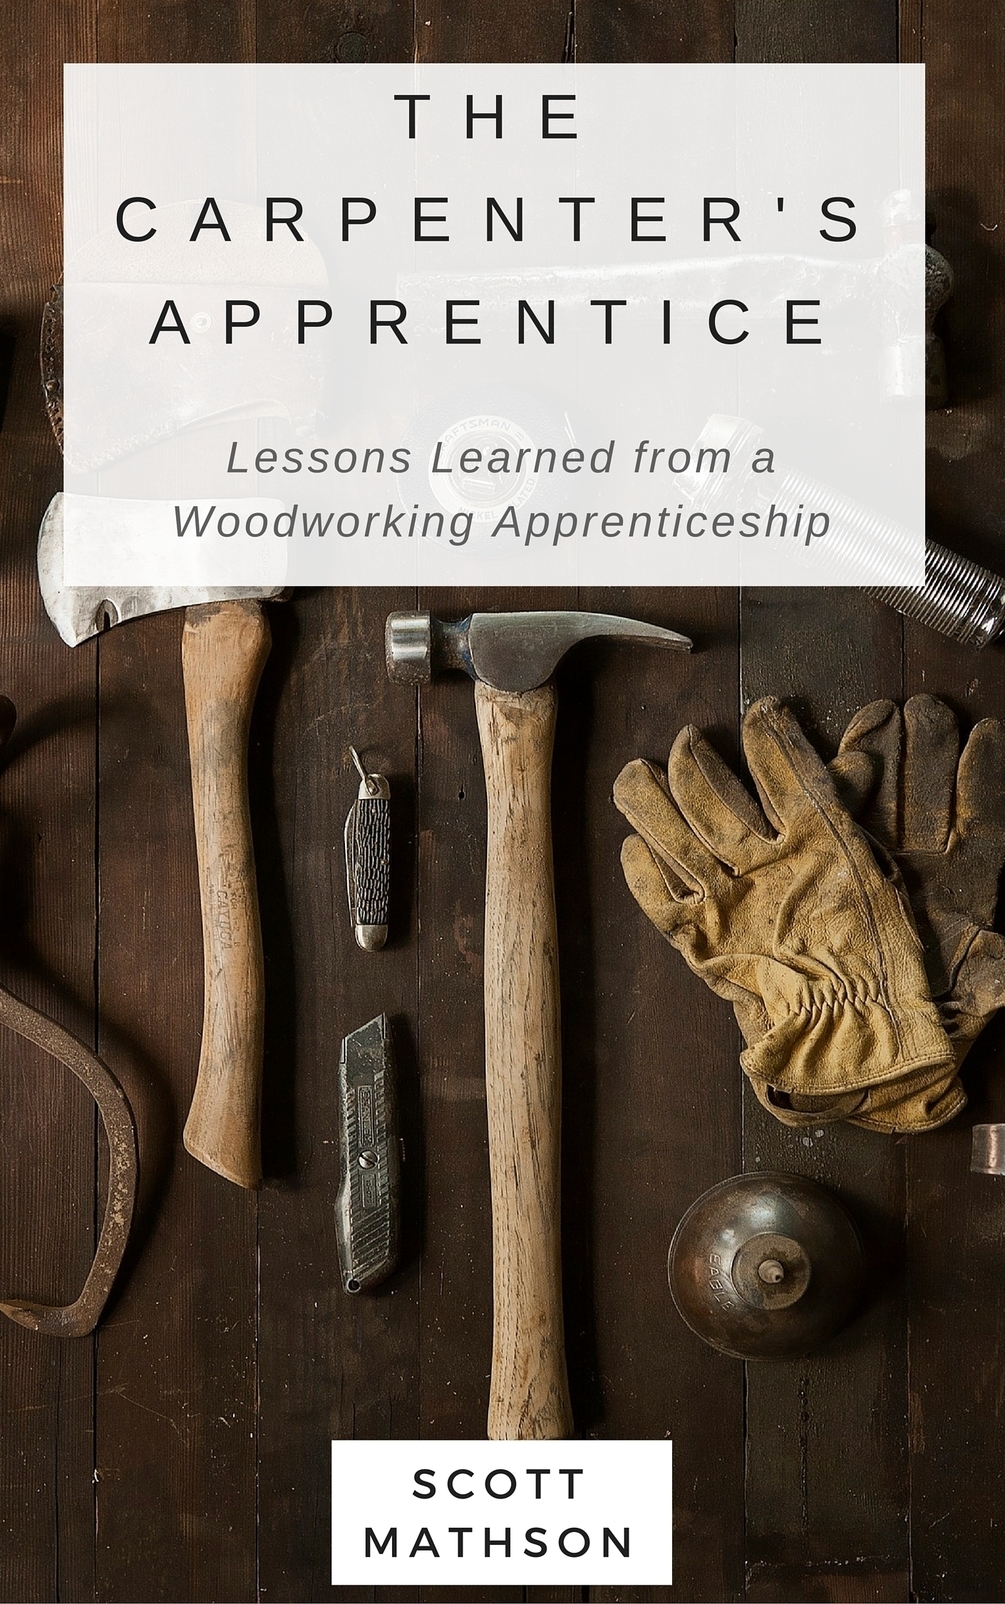 The Carpenter's Apprentice by Scott Mathson